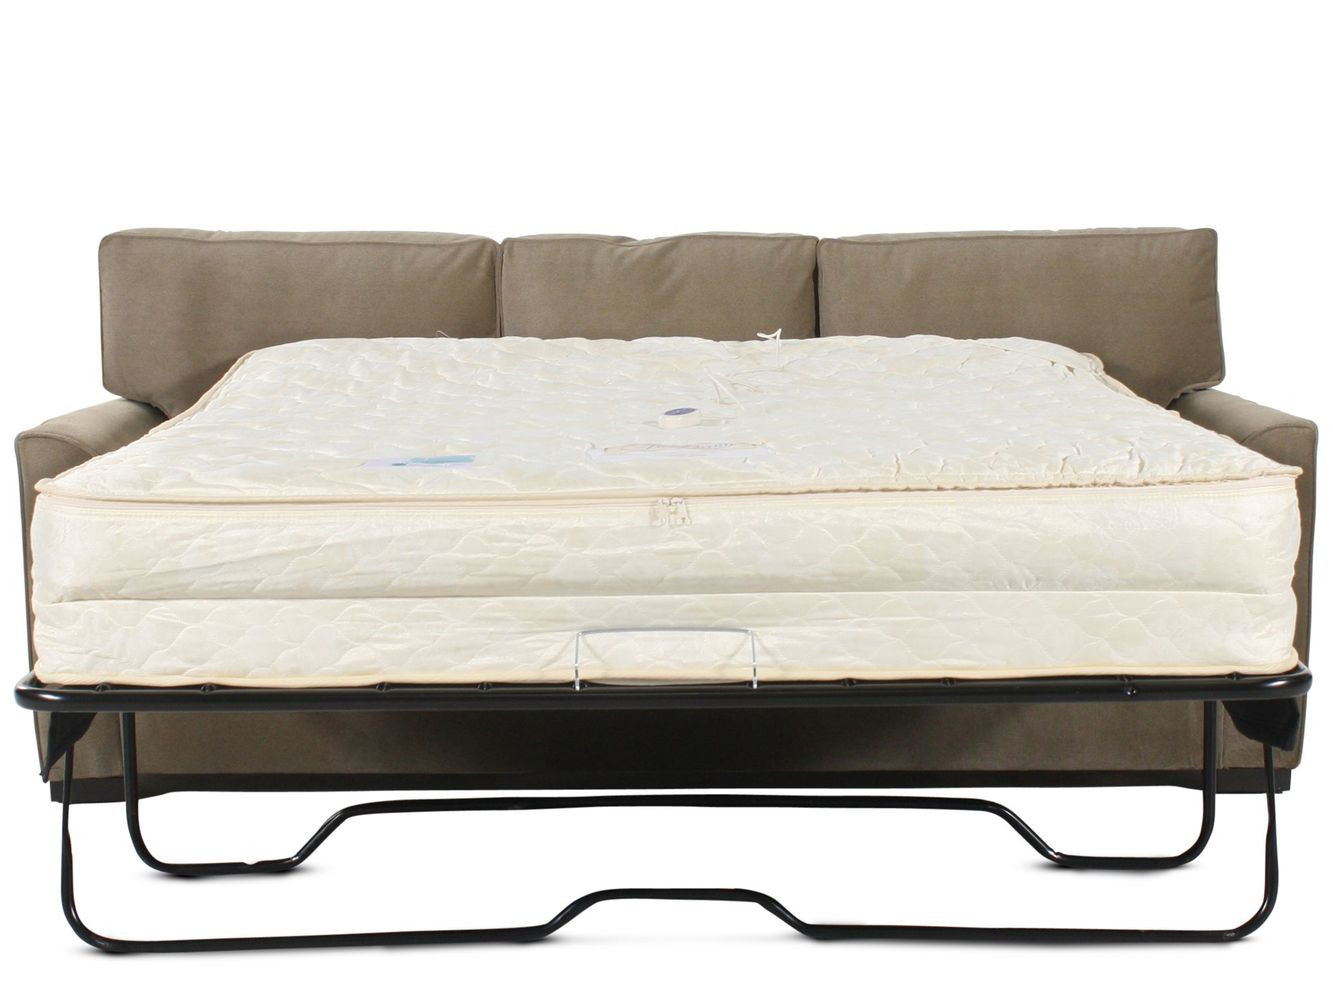 Best ideas about Sleeper Sofa With Air Mattress
. Save or Pin Jonathan Louis Queen Sleeper Sofa with Air Mattress Now.